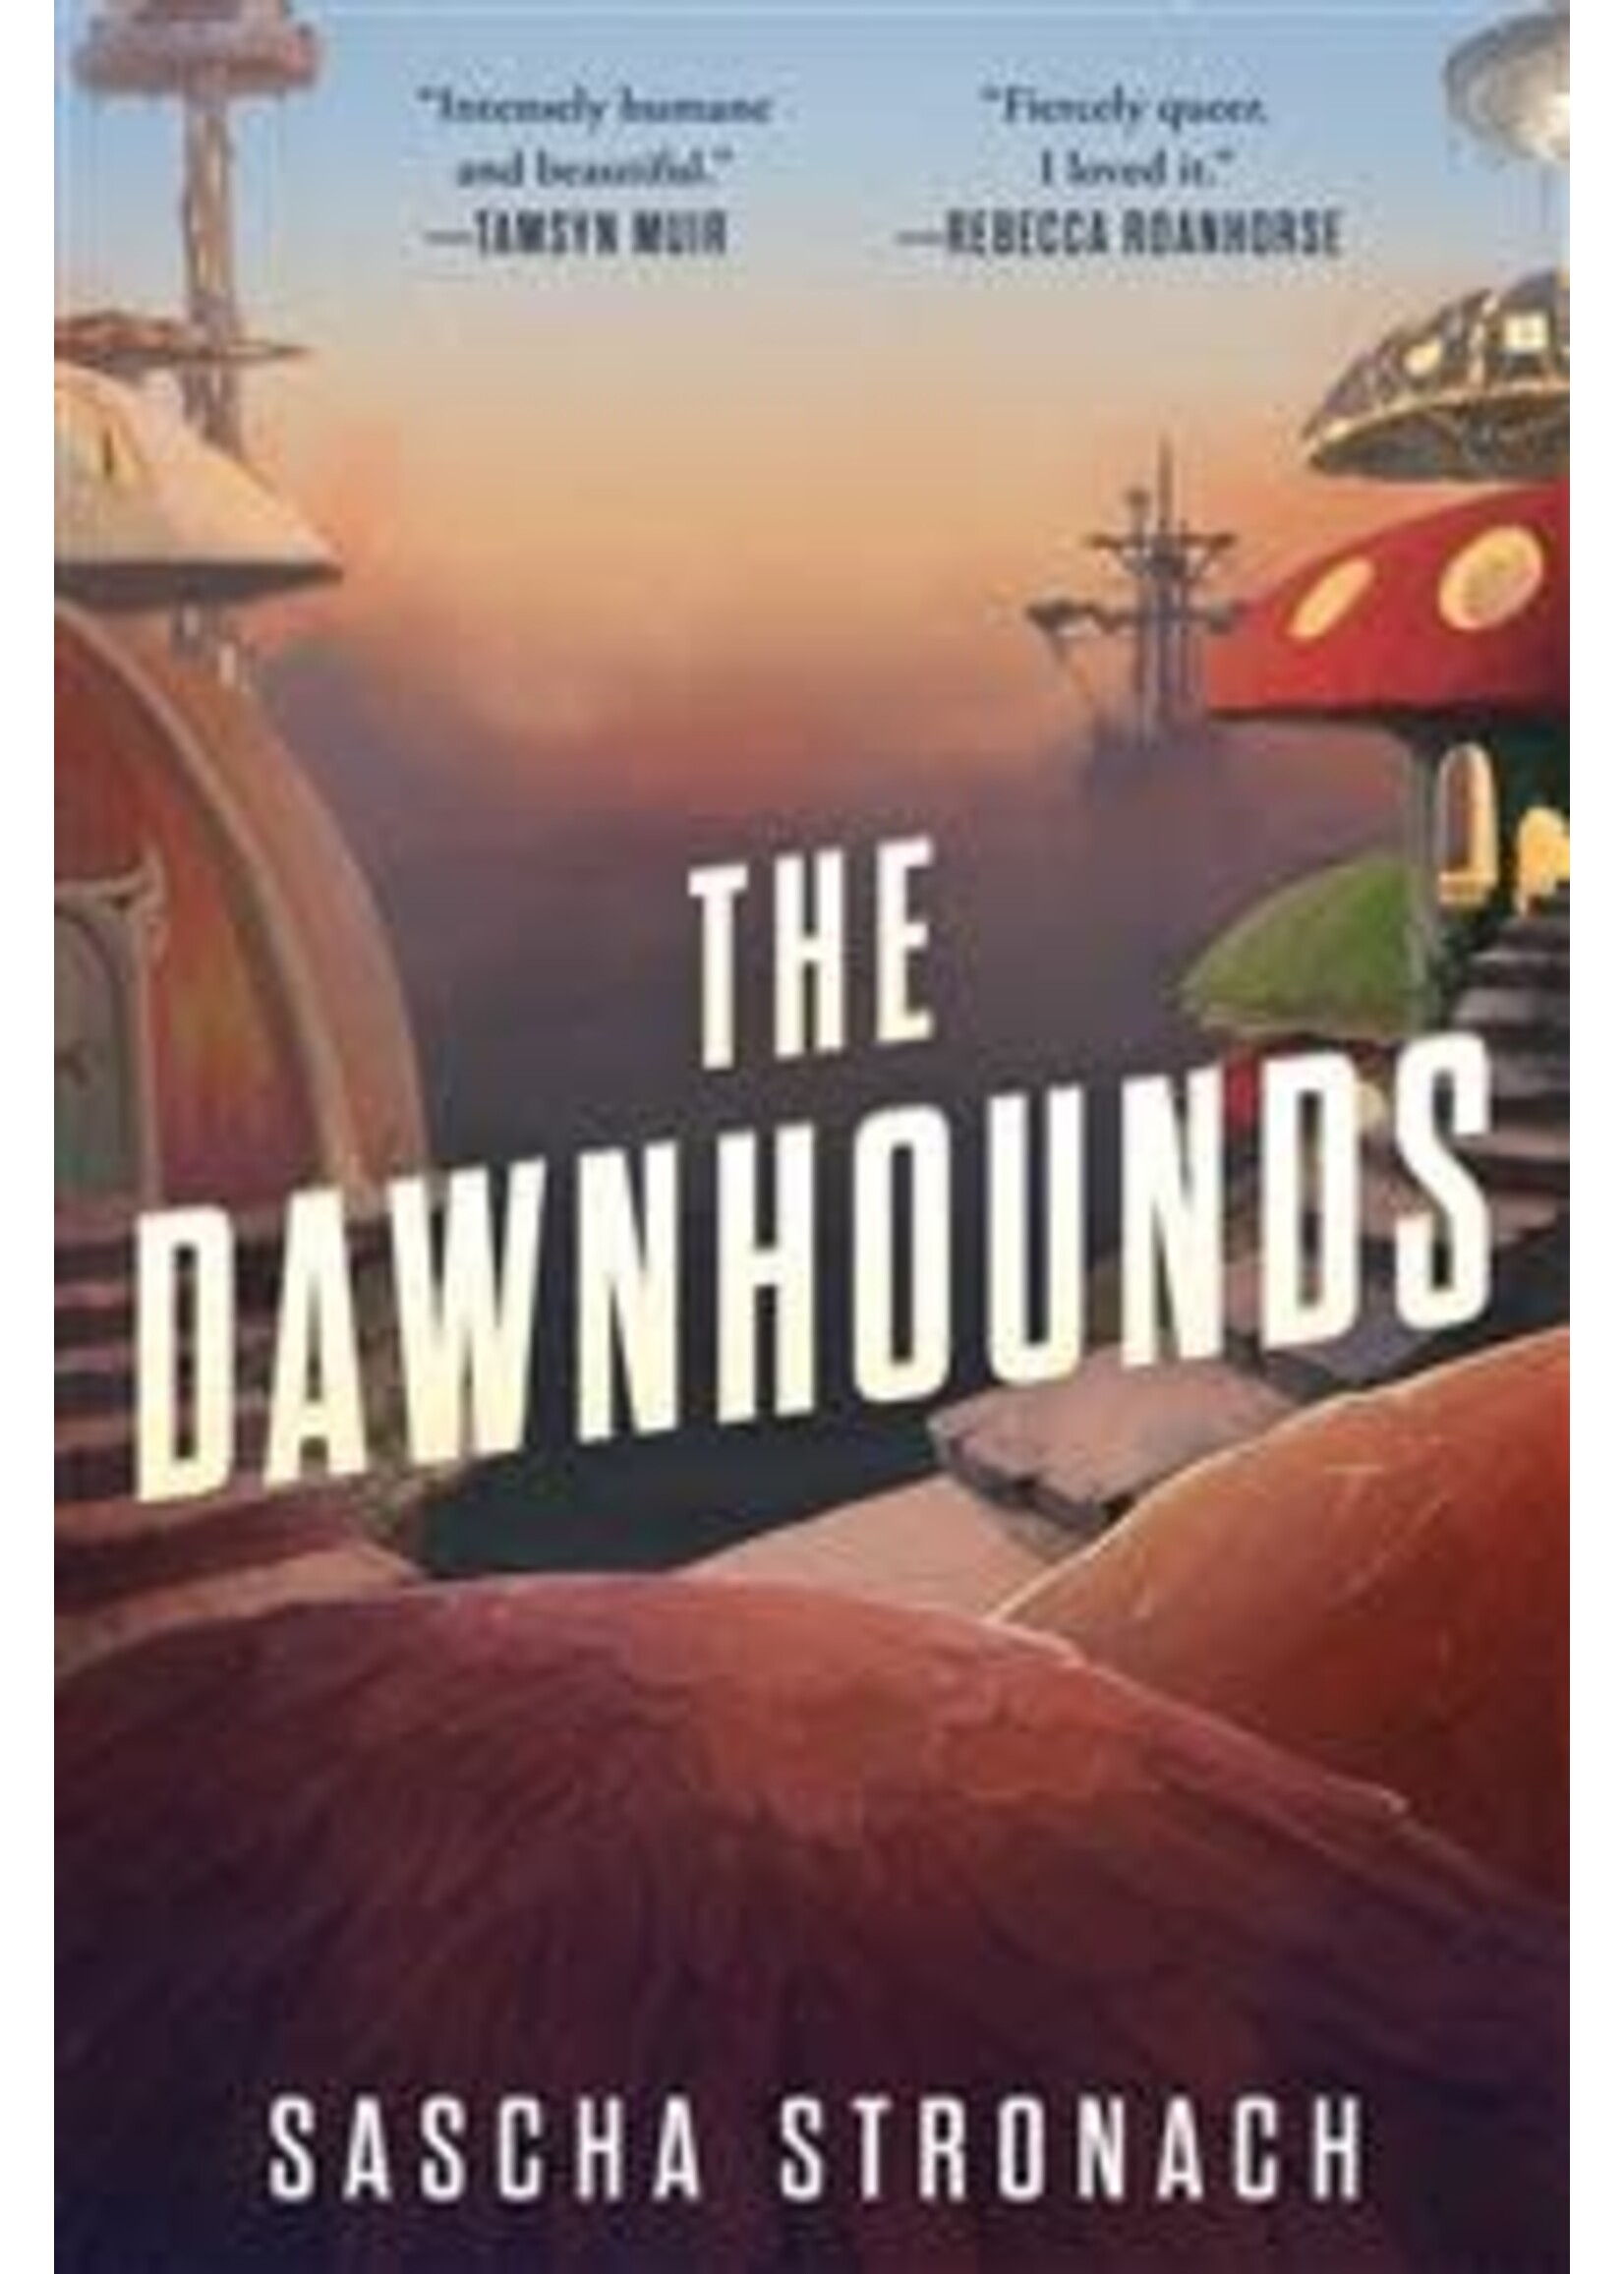 The Dawnhounds (The Endsong #1) by Sascha Stronach